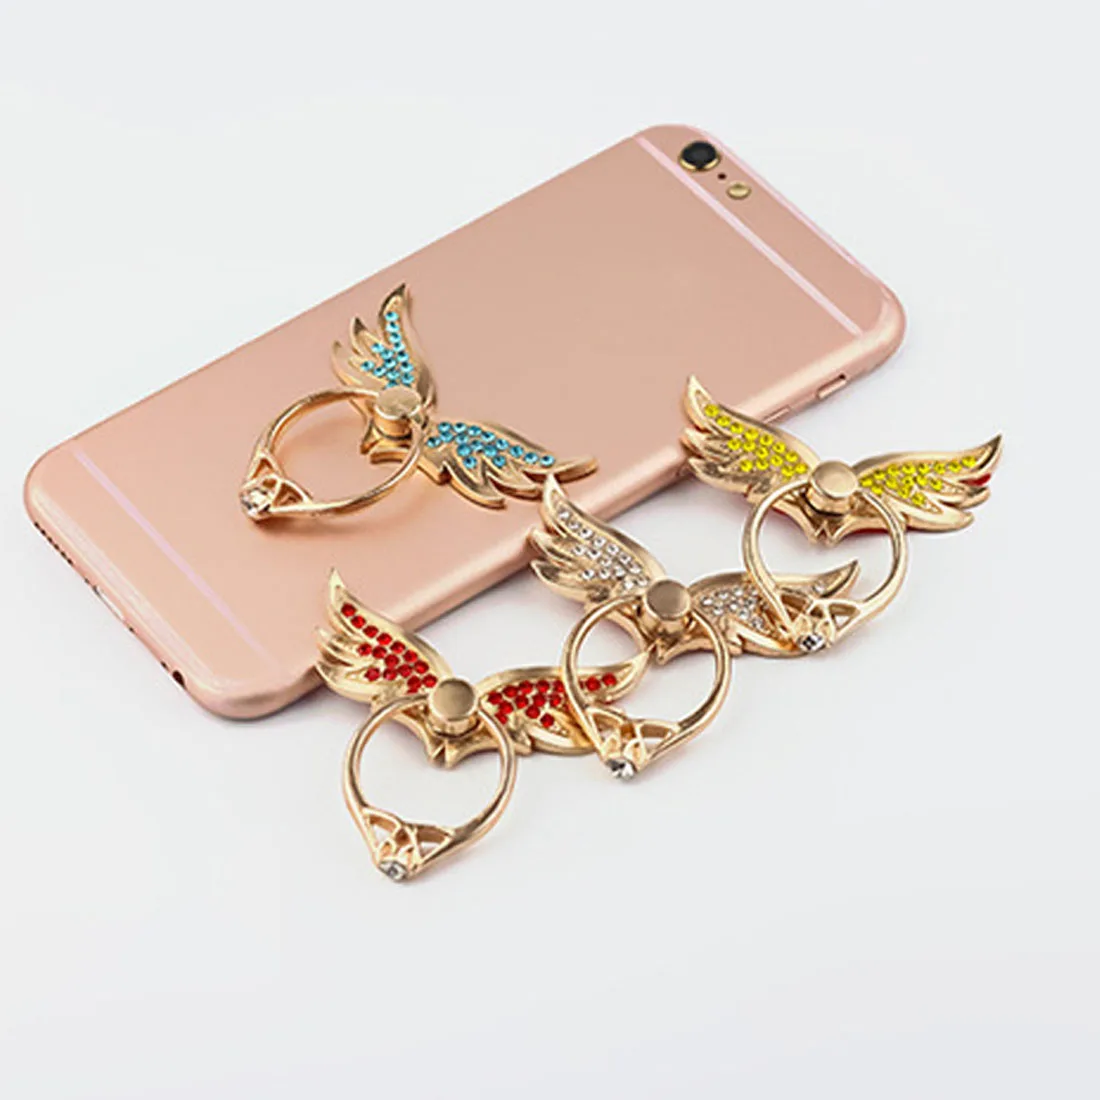 Etmakit Hot Angel Wings Fashion 360 Degree Multi-function Metal Finger Ring Mobile Phone Ring Holder For iPhone Samsung Mobile